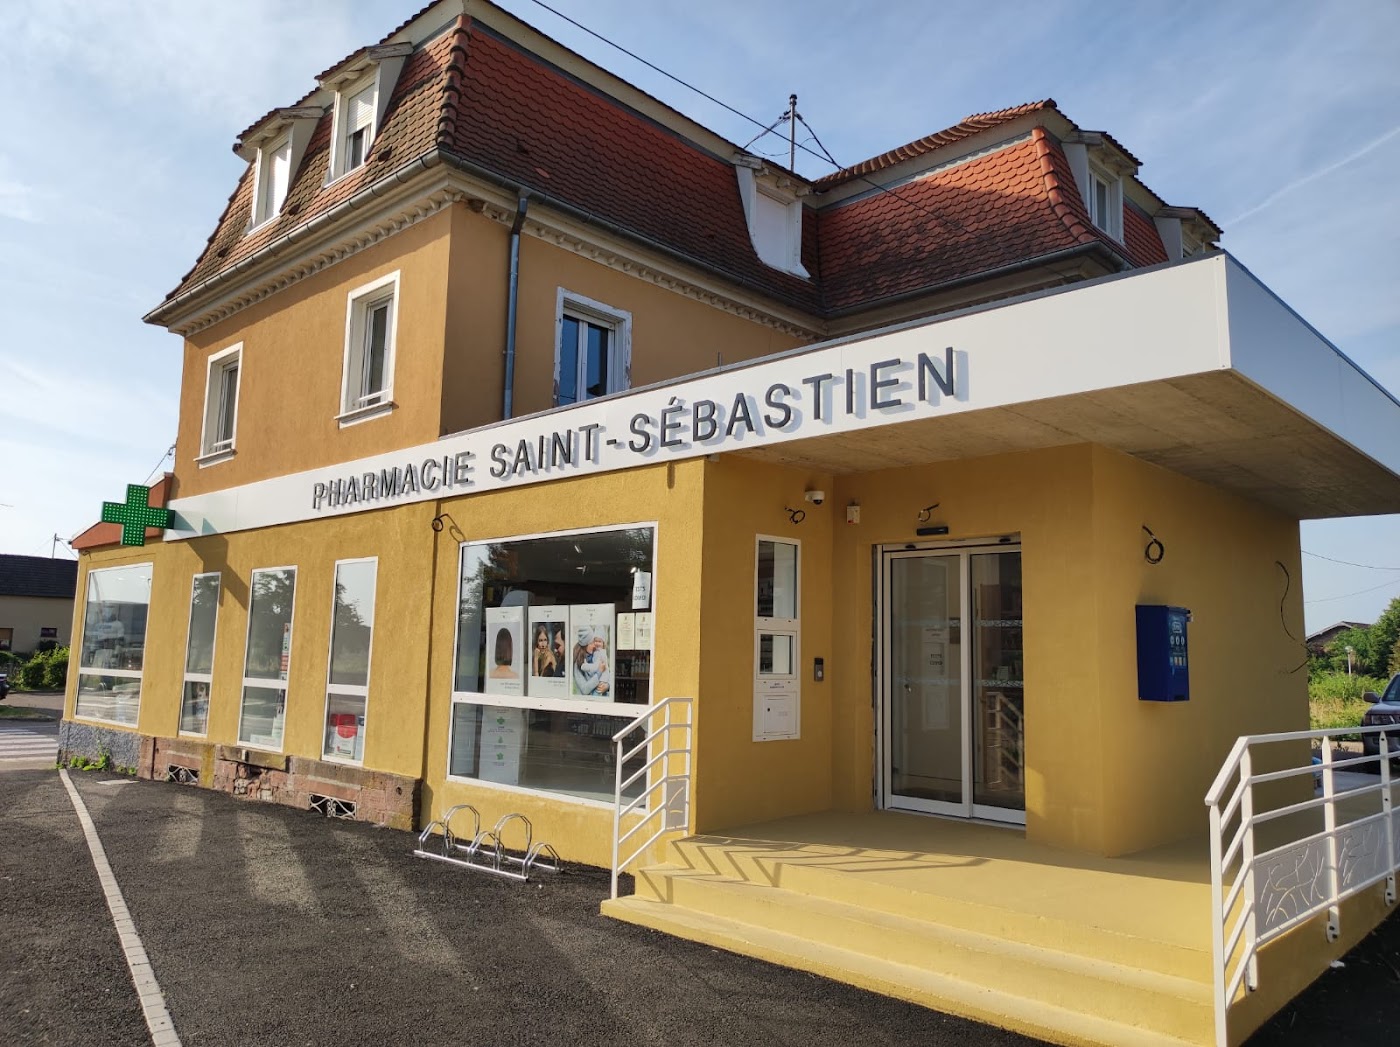 Pharmacie Saint Sébastien